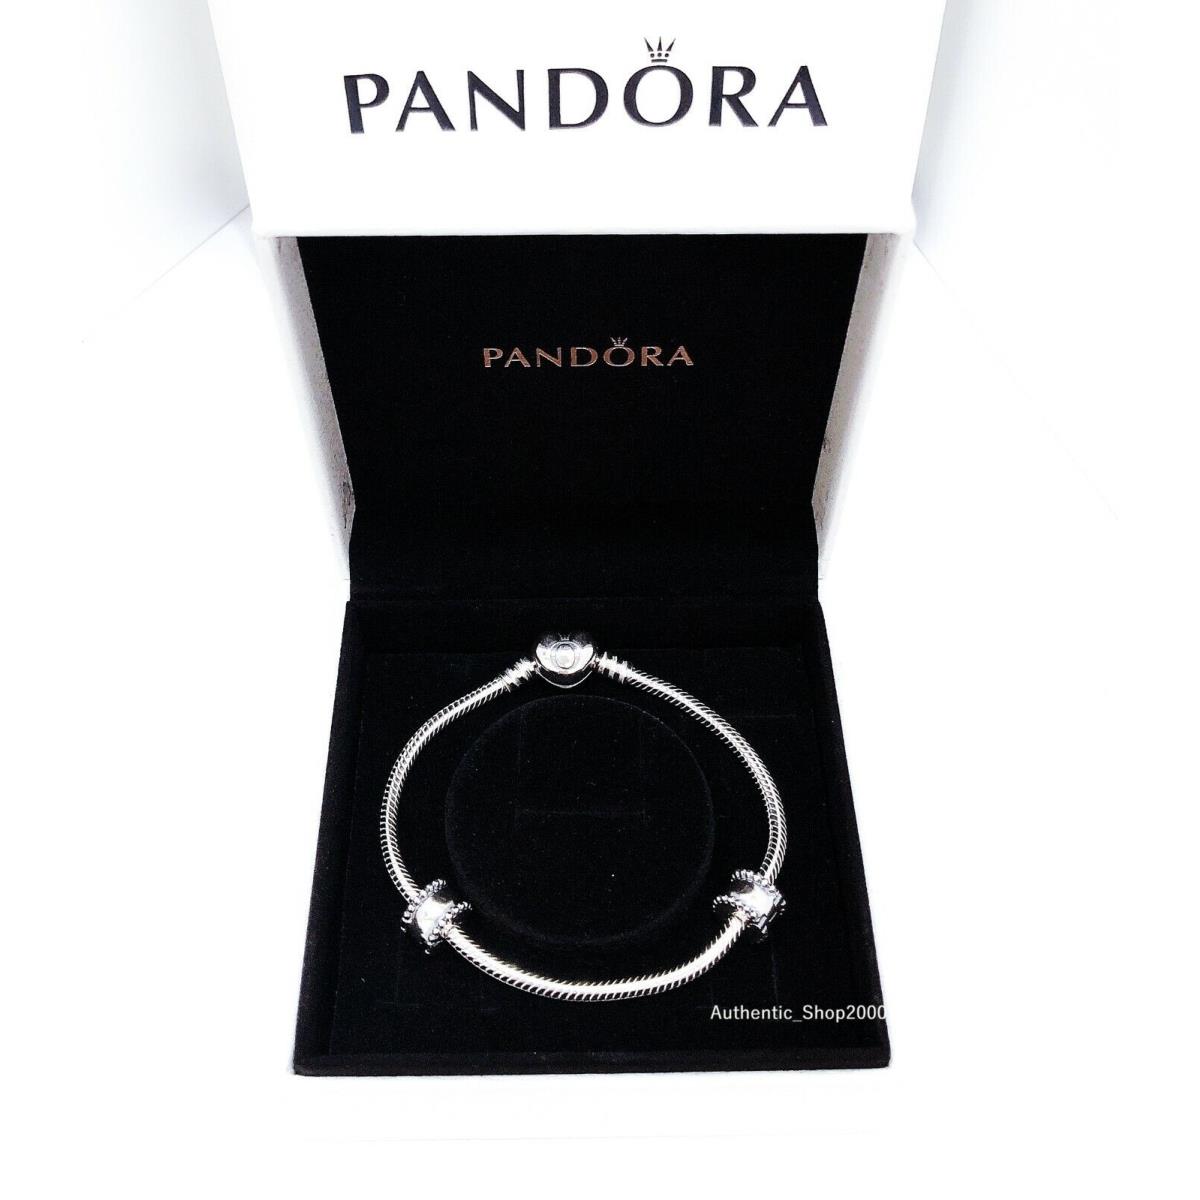 Pandora 925 Silver Snake Chain Heart Clasp 2 Charm Bracelet Gift Set